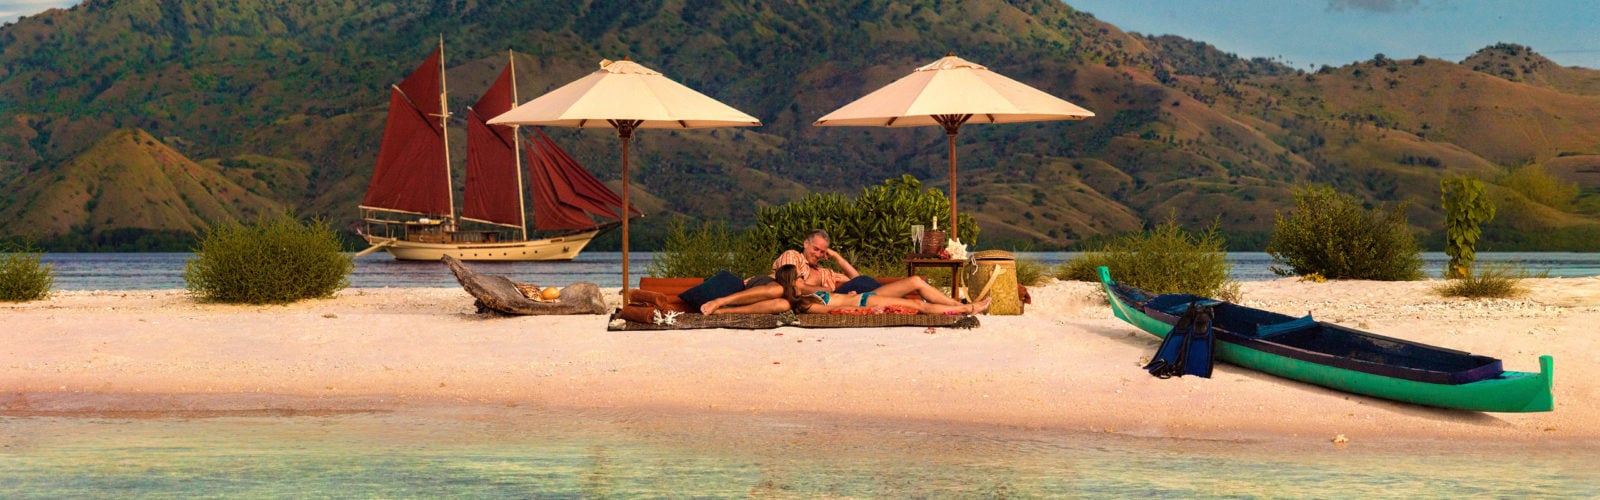 si-datu-relaxing-on-beach